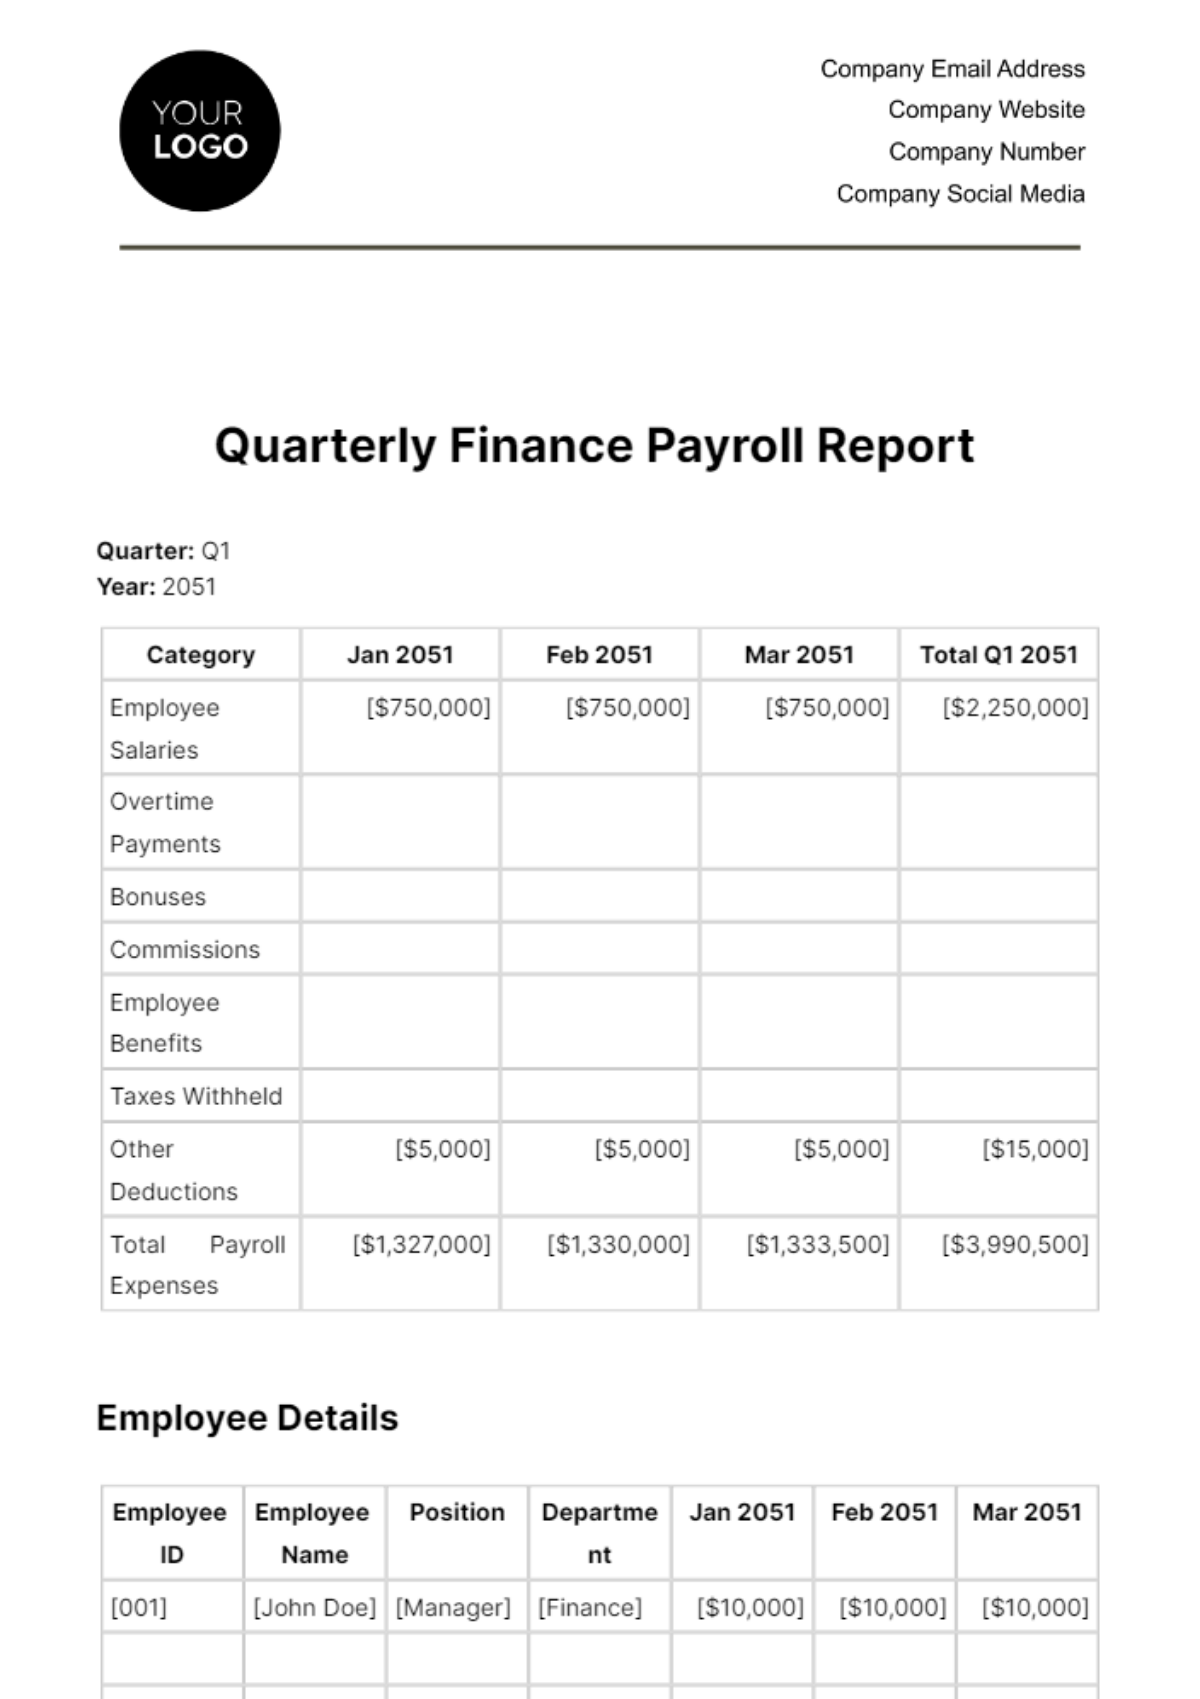 Quarterly Finance Payroll Report Template